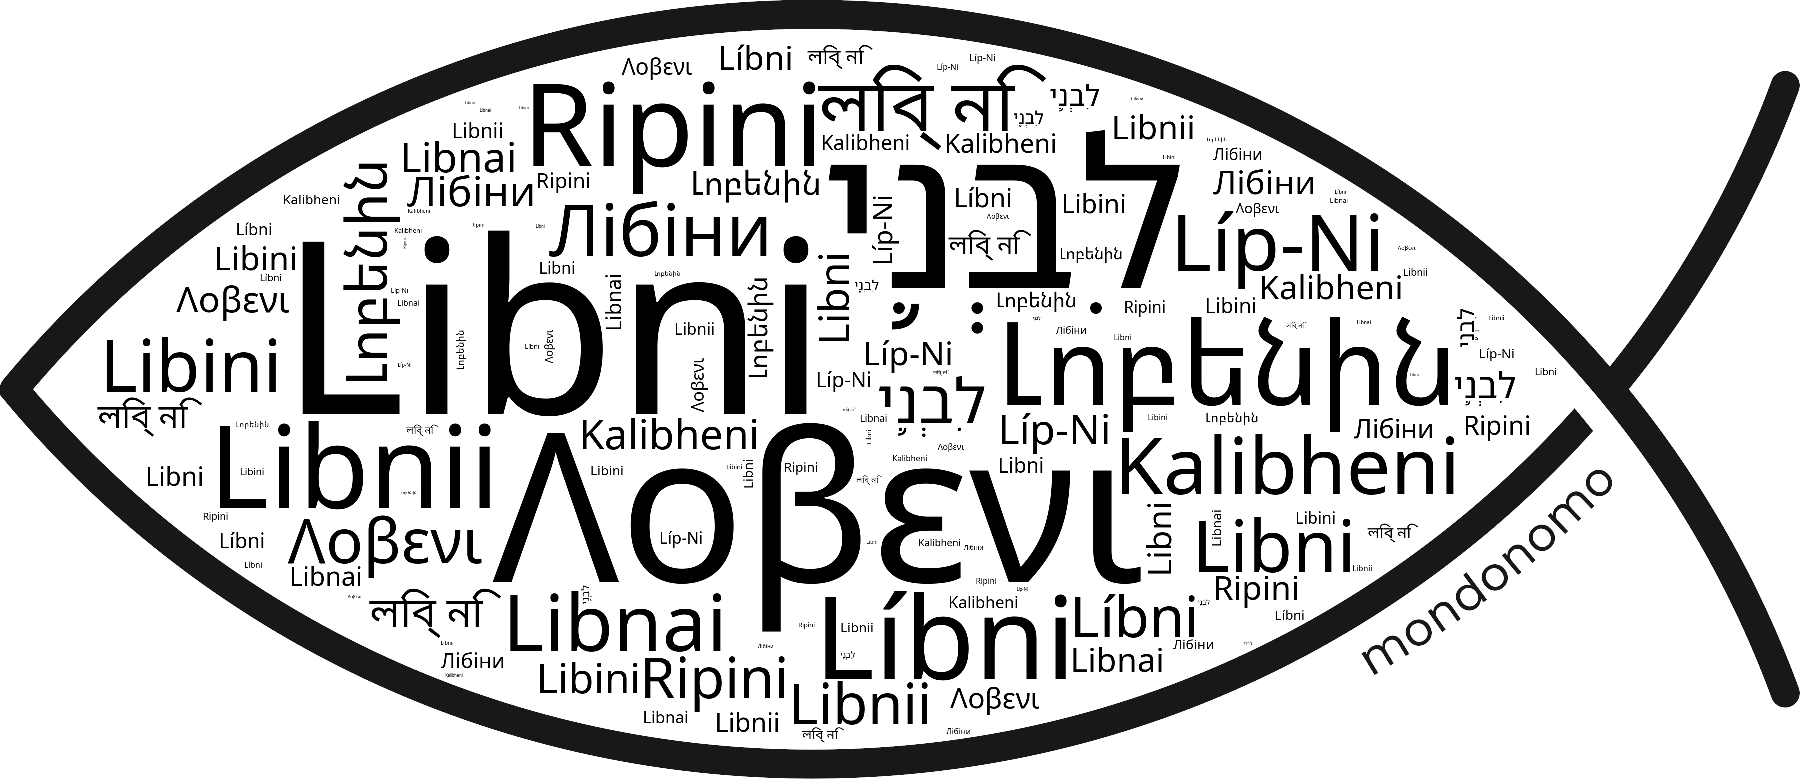 Name Libni in the world's Bibles